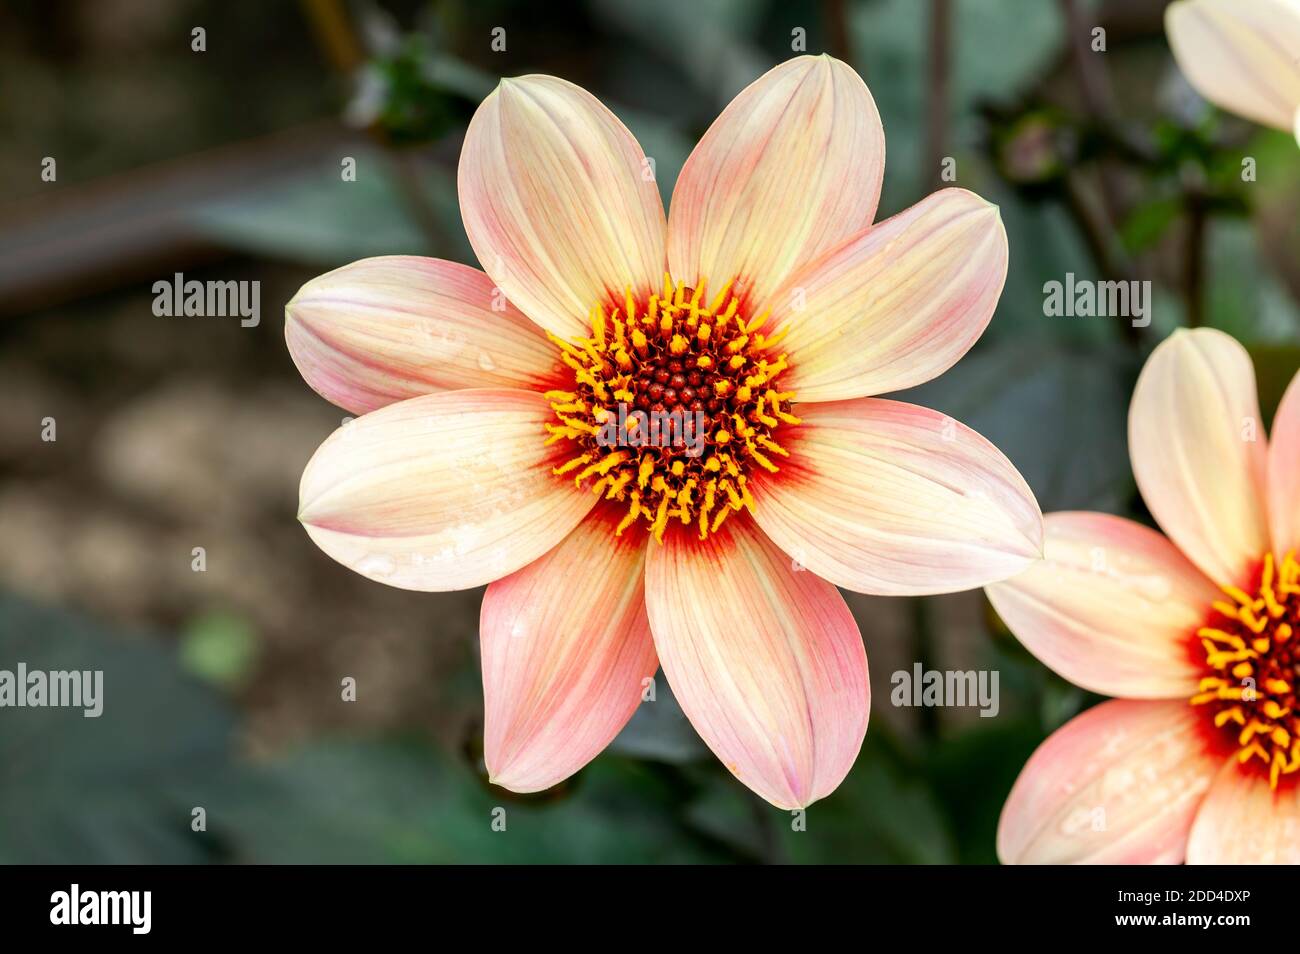 Dahlia 'Happy Single First Love' a orange pink summer autumn flower tuber plant, stock photo image Stock Photo